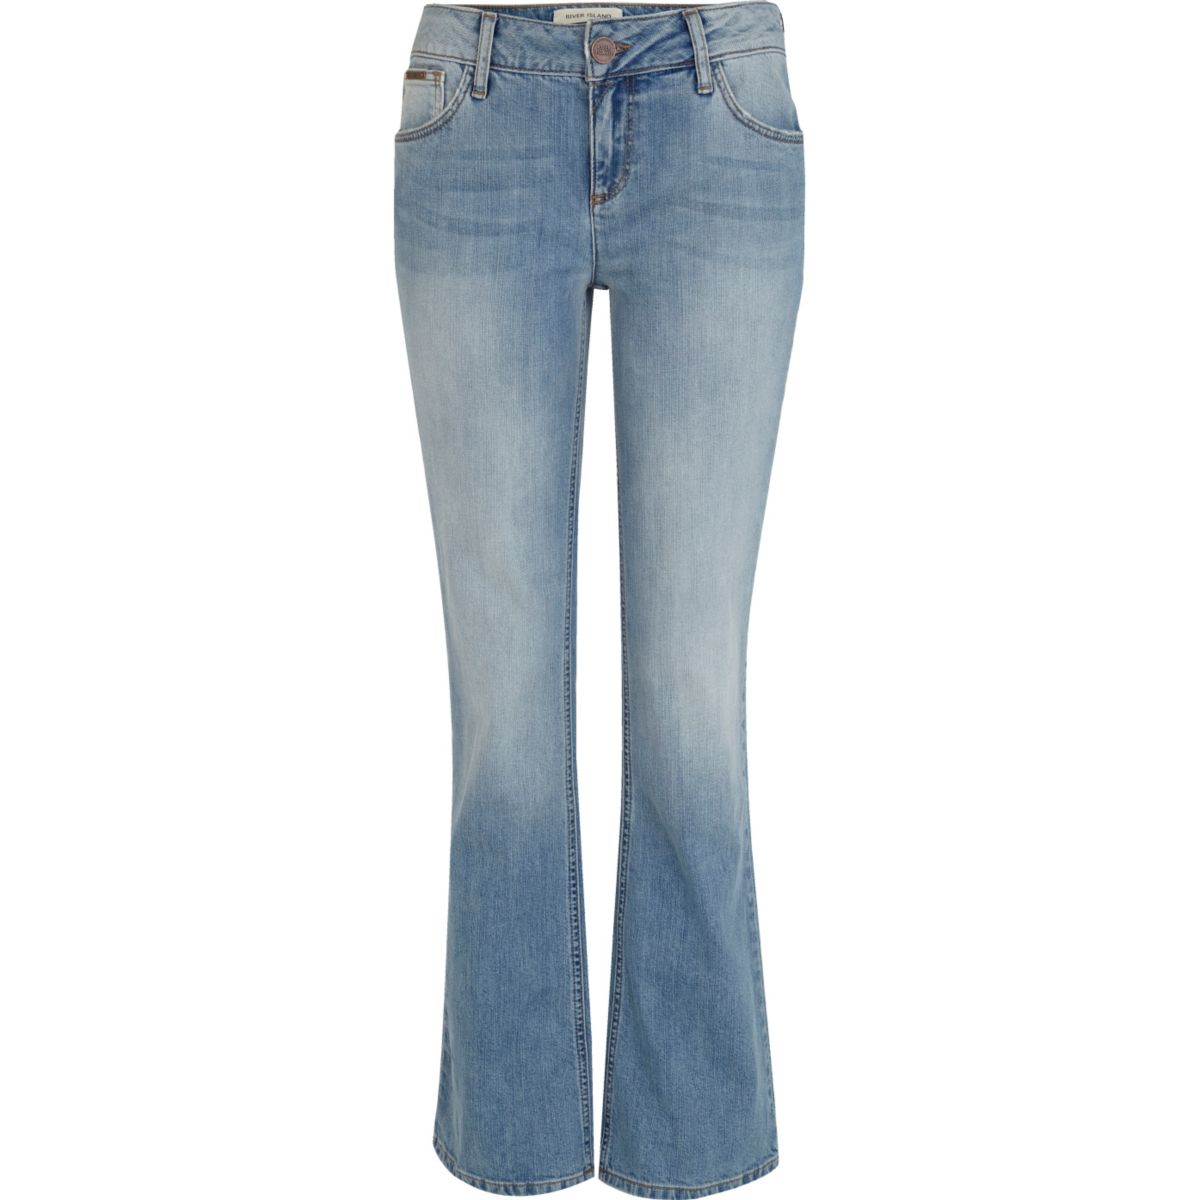 Light wash Cleo bootcut jeans - Jeans - Sale - women